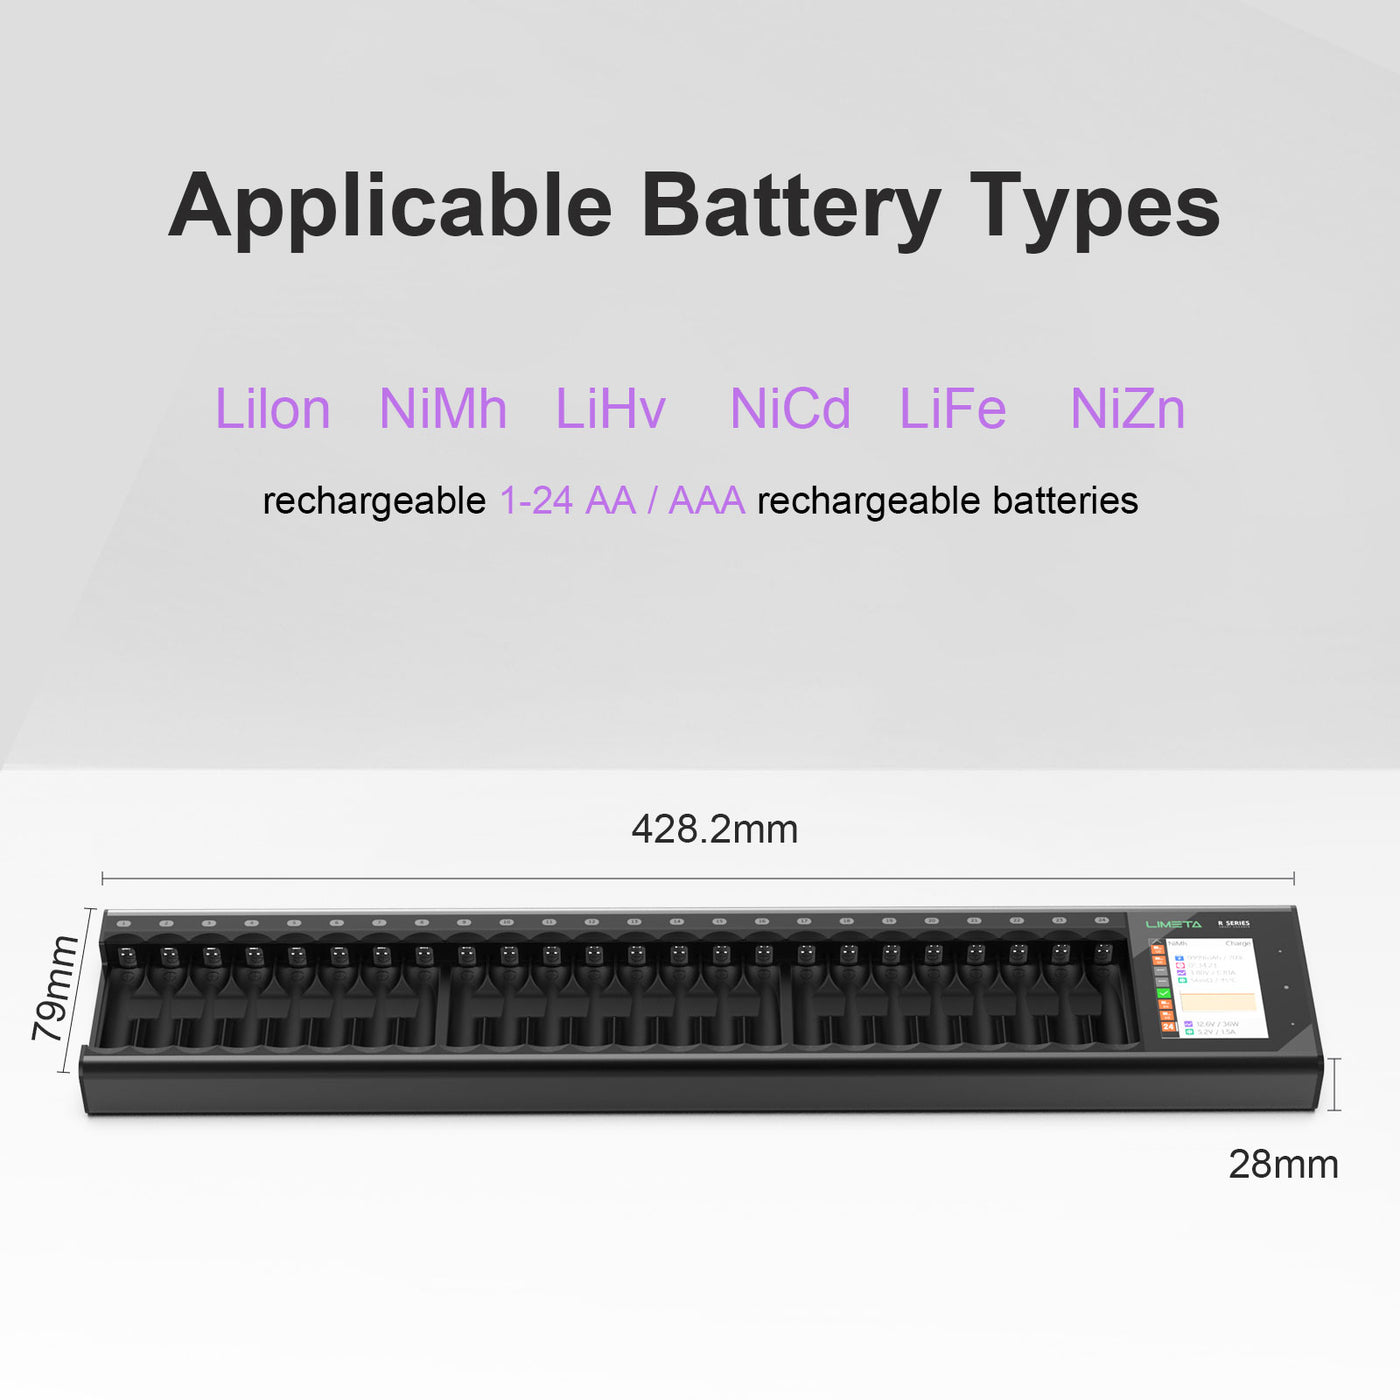 LIMETA AA AAA Smart Battery Charger 24 Slots,Universal Fast Battery Charger with Discharge& LCD Display for AA AAA Li-lon, LiHv, NiMH, NiCd, HiFe, NiZn Rechargeable Batteries